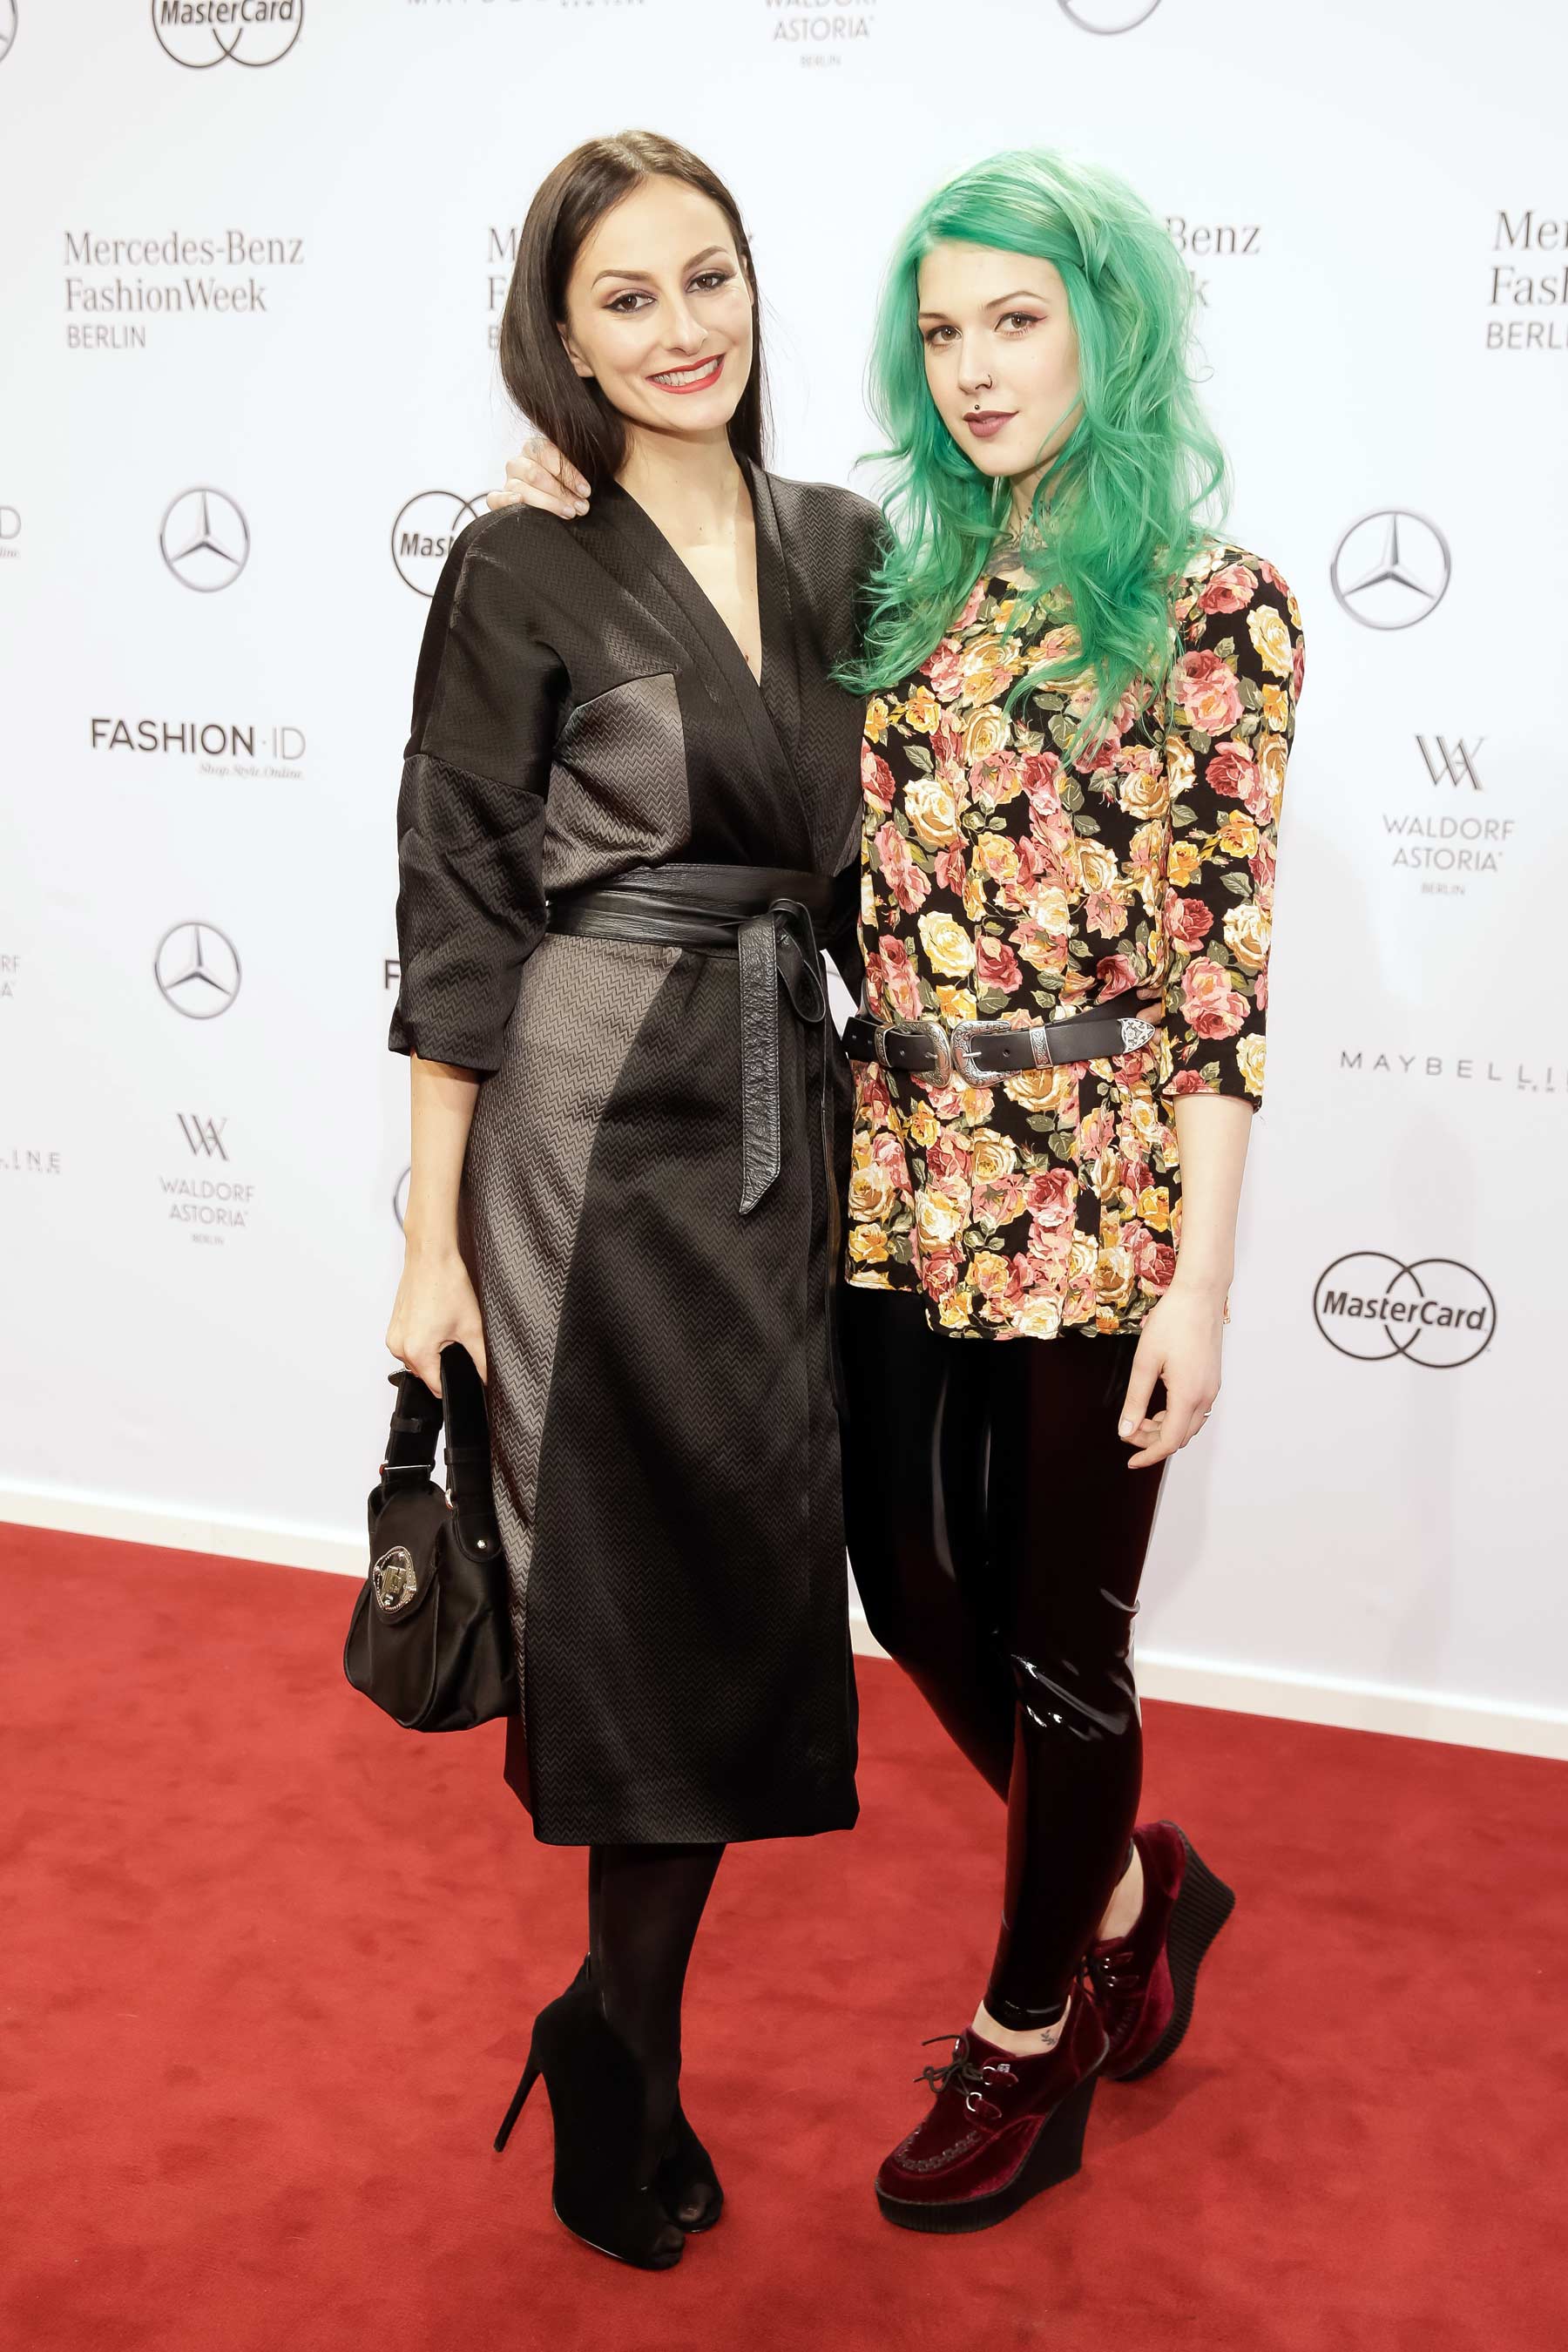 German celebs attend Mercedes Benz Fashion Week